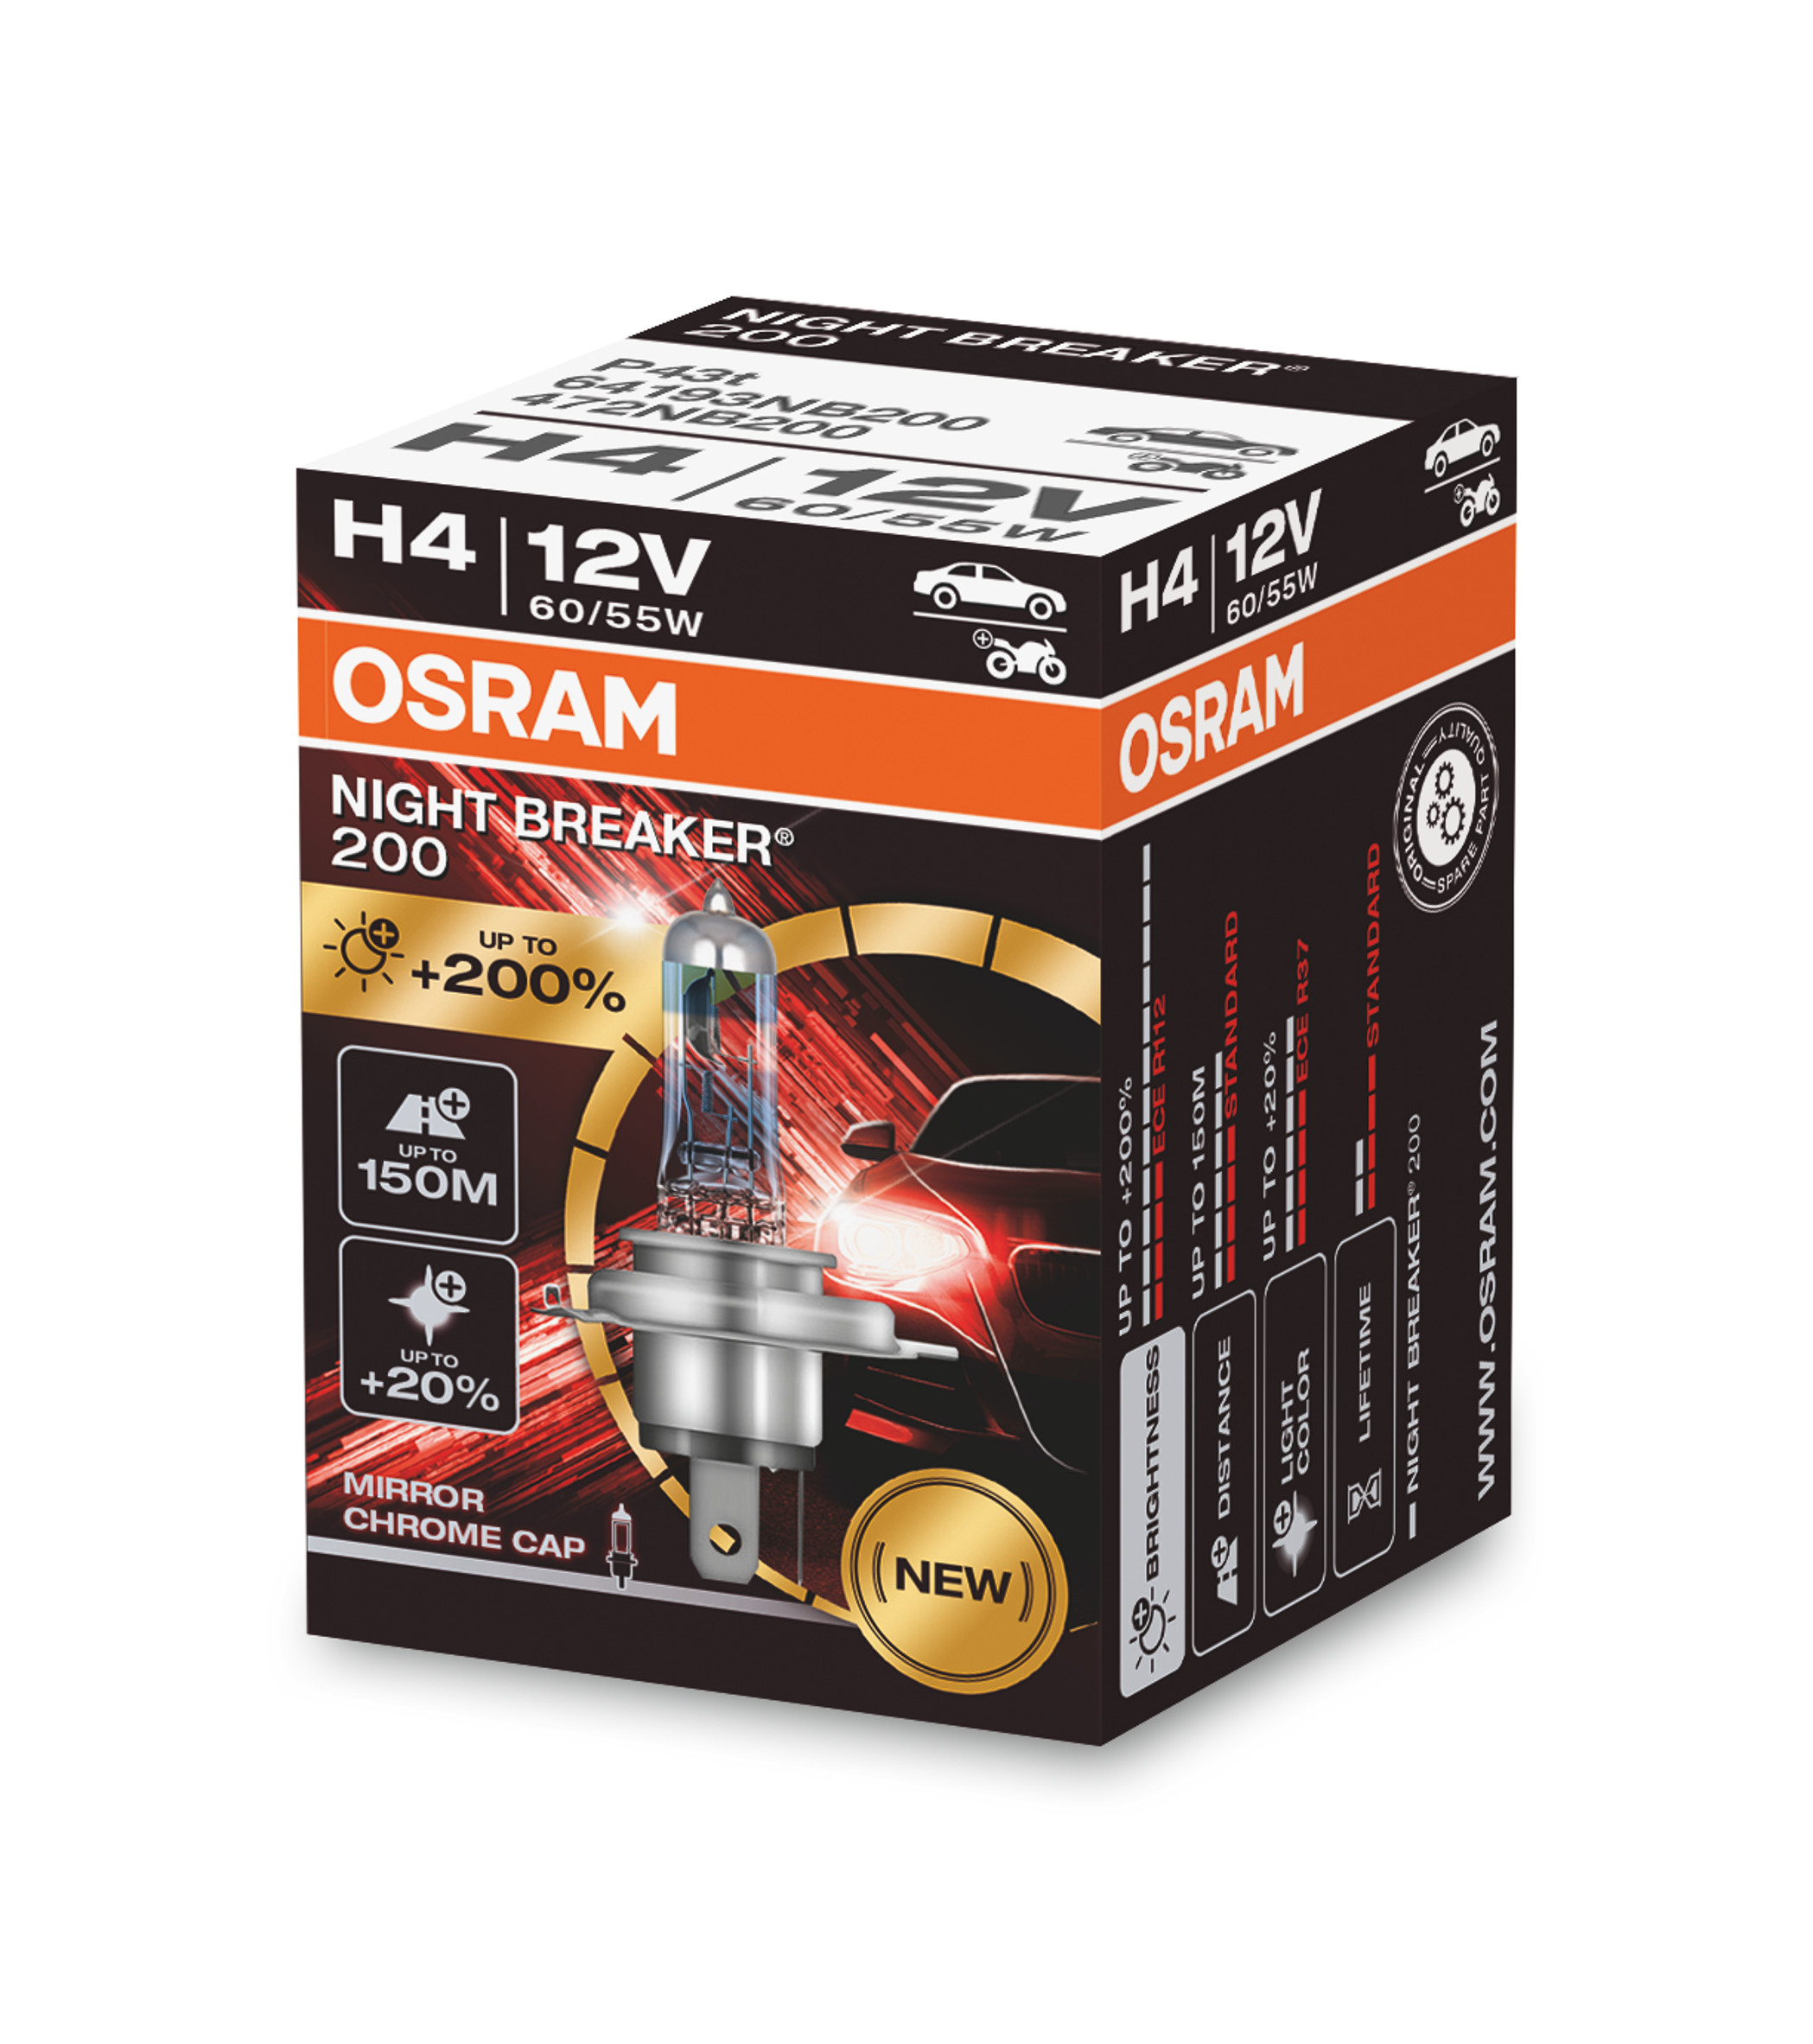 Osram H7 55W Night Breaker 200 (+200% up brightness)